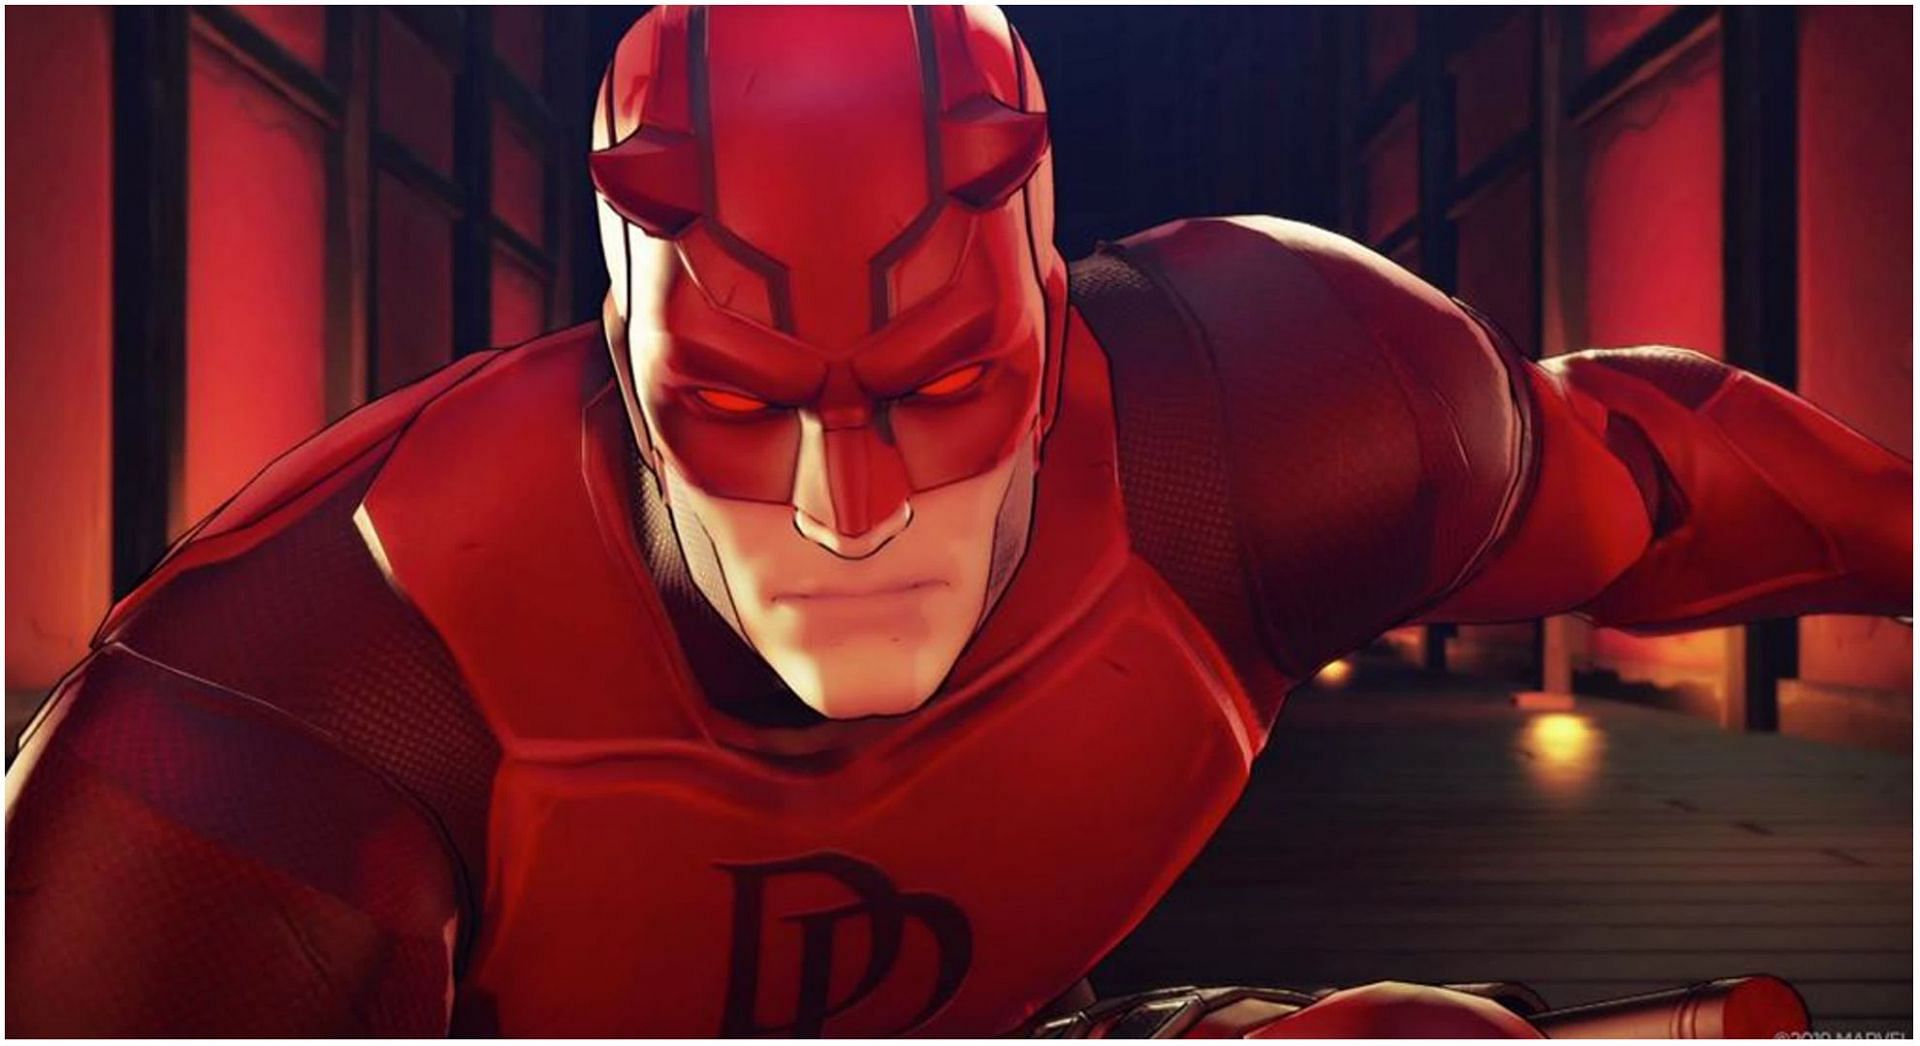 Daredevil (image via Nintendo)